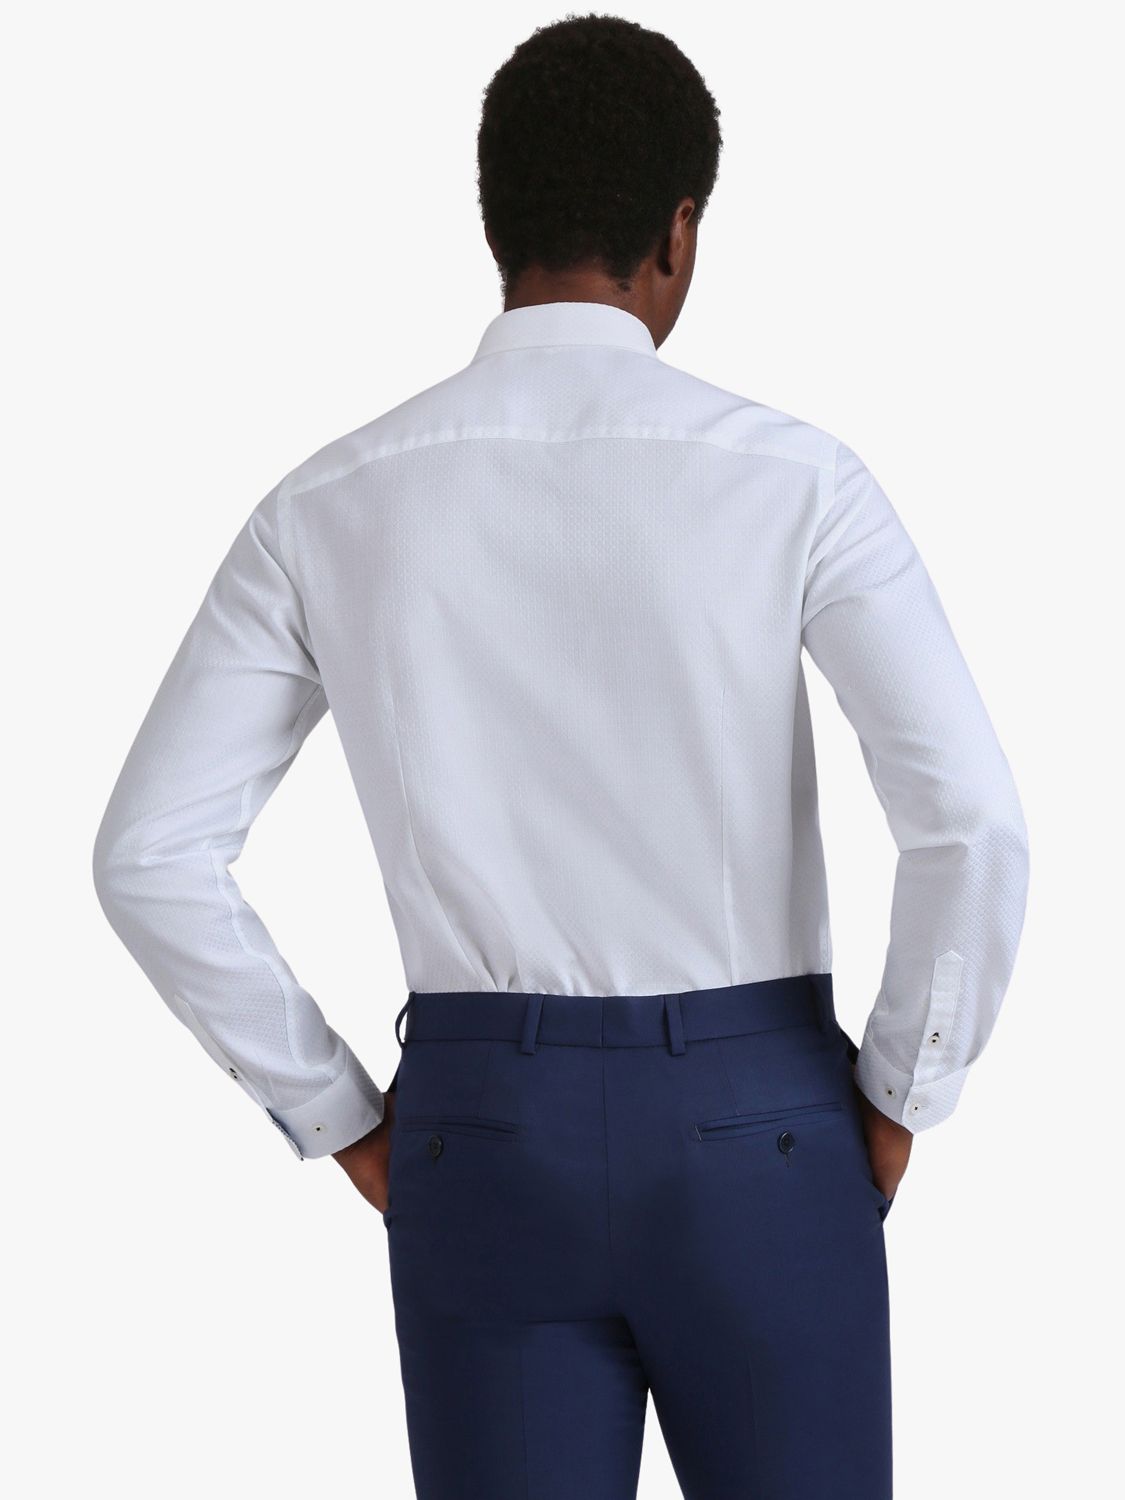 Ted Baker Makalu Jacquard Slim Fit Shirt, White, 17.5R